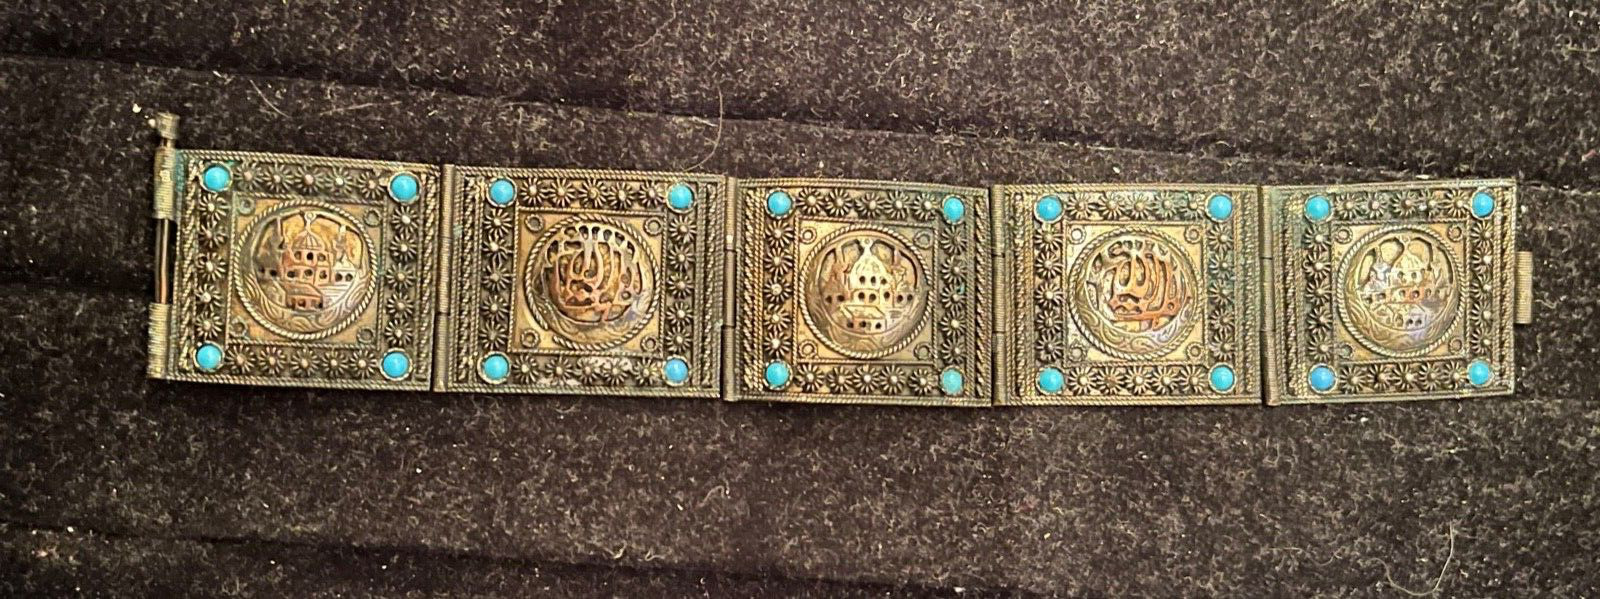 Vintage 1940s Silver Panel Link Bracelet with Turquoise Gemstones 900 Silver